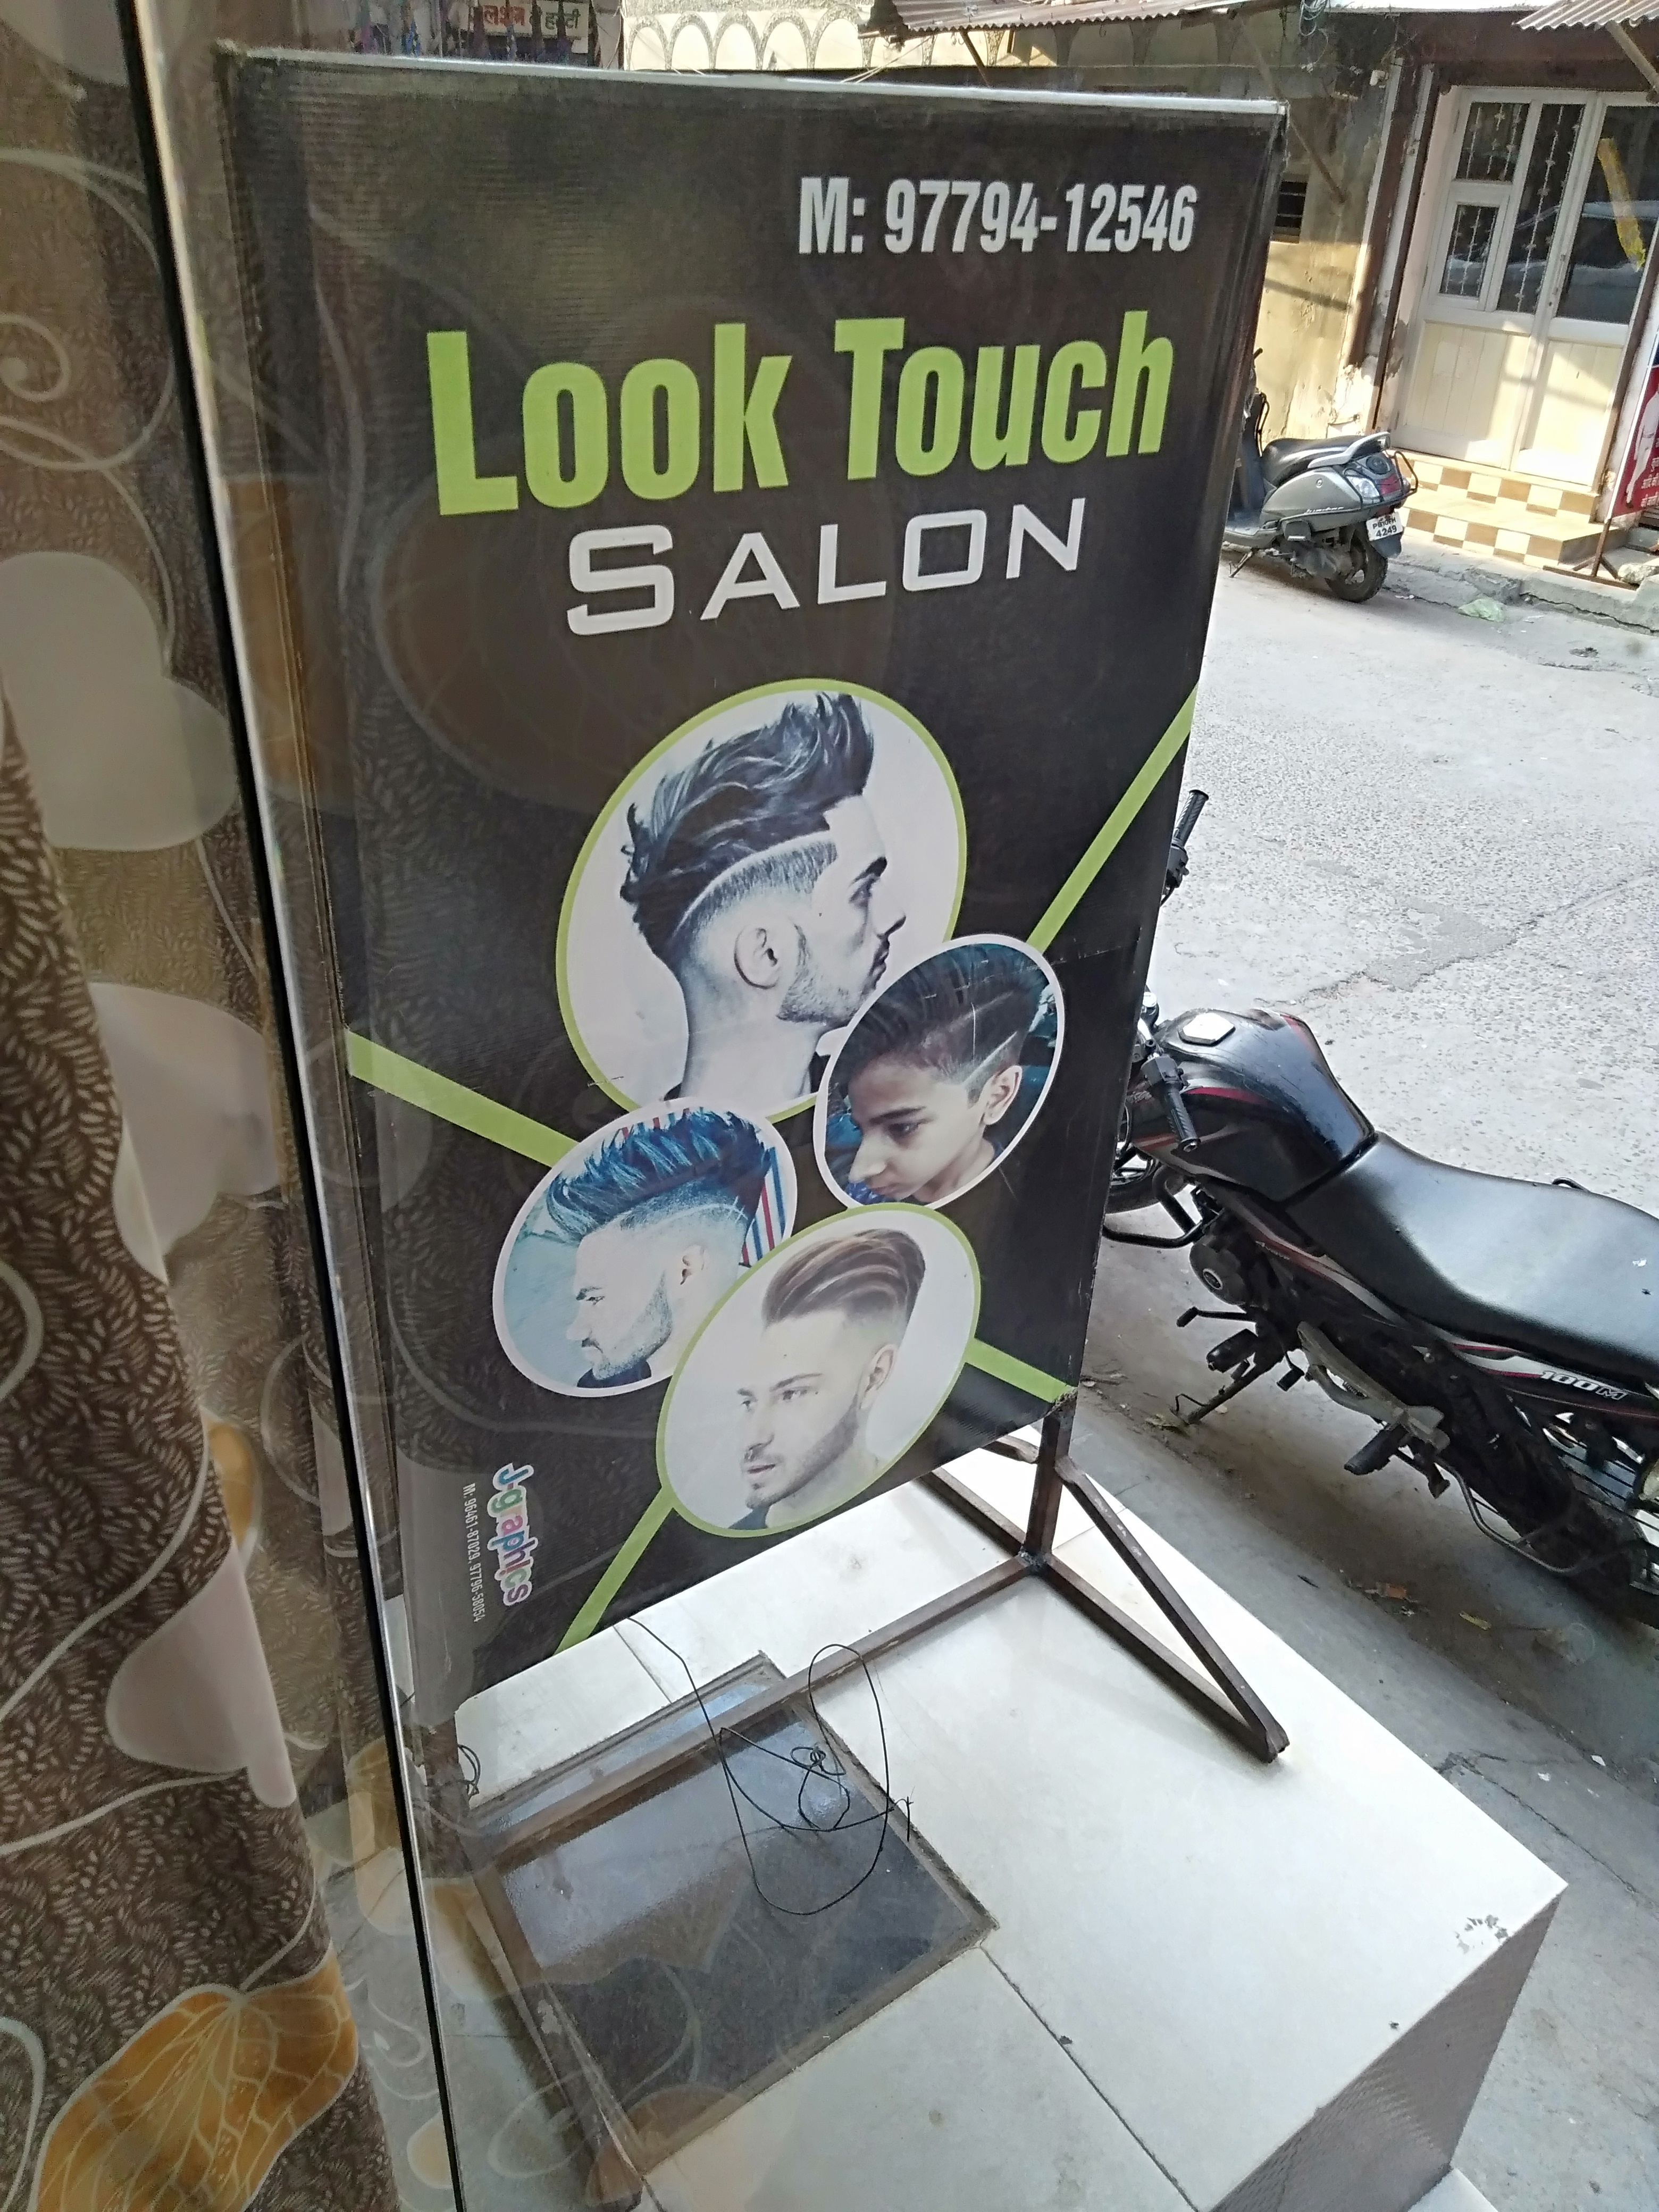 Look touch salon